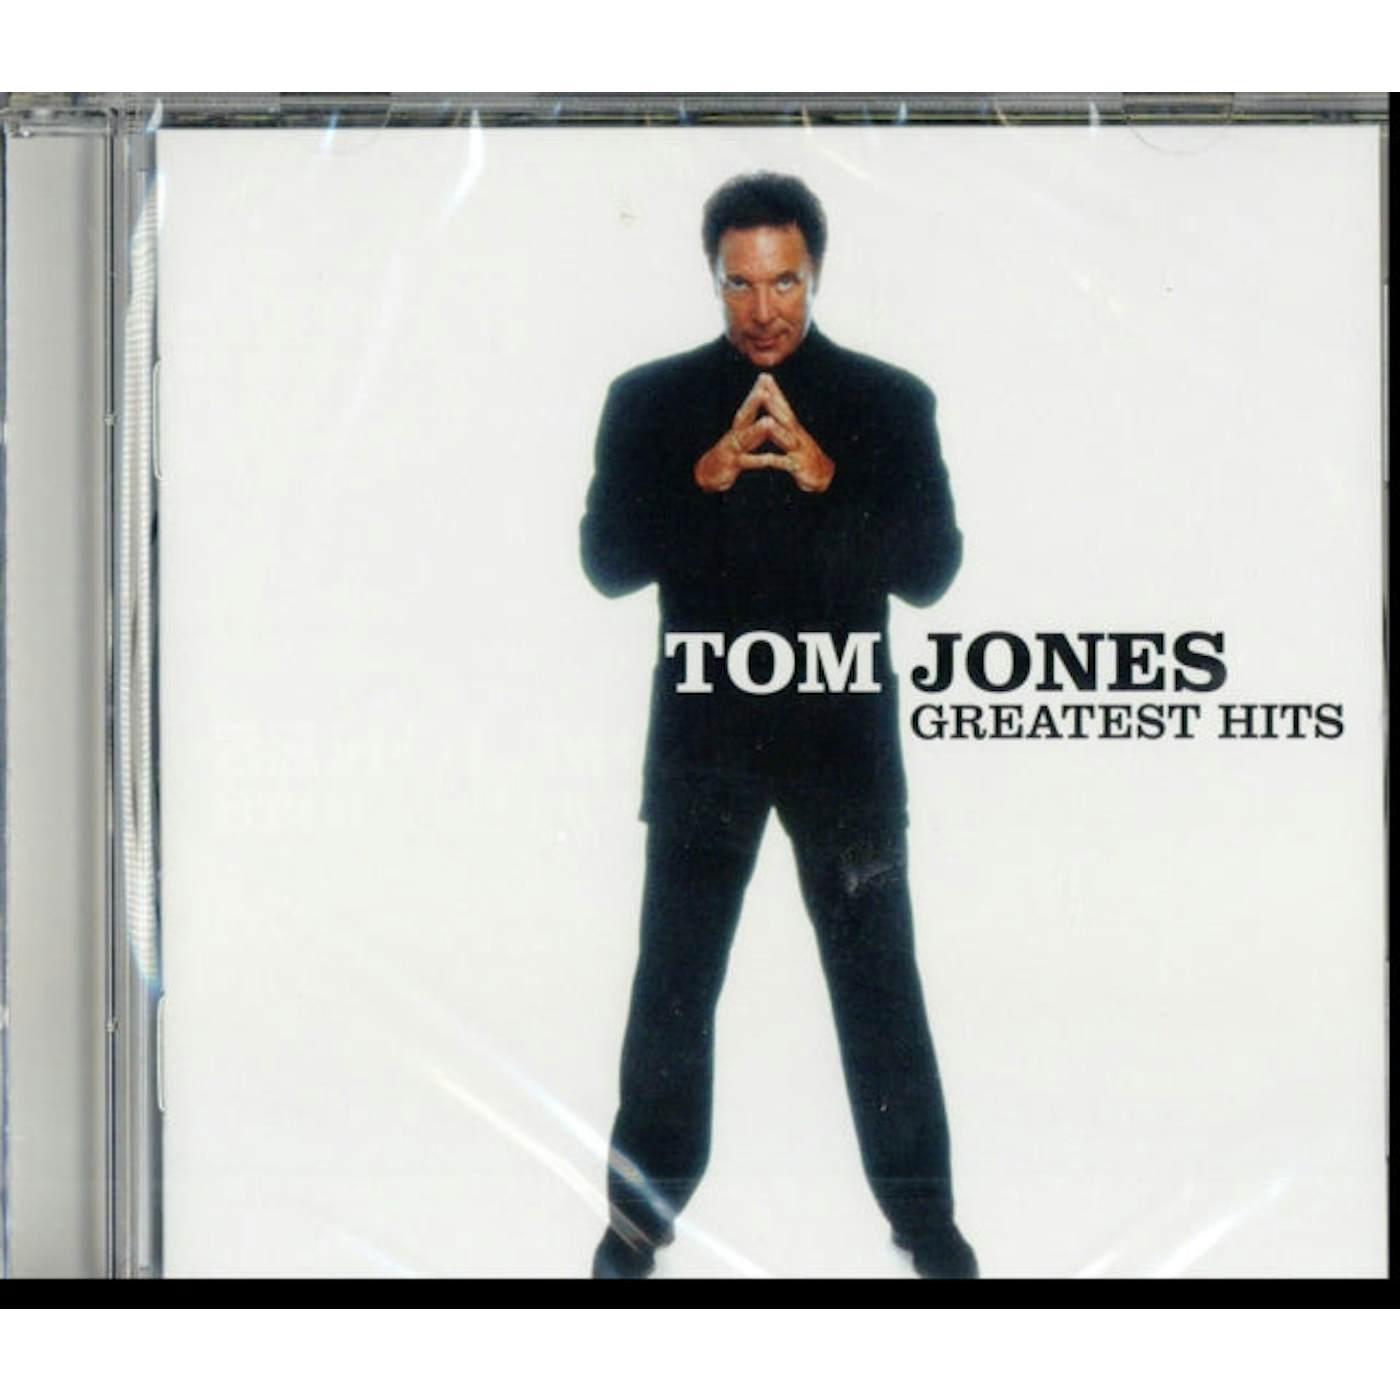 Tom Jones CD - Greatest Hits